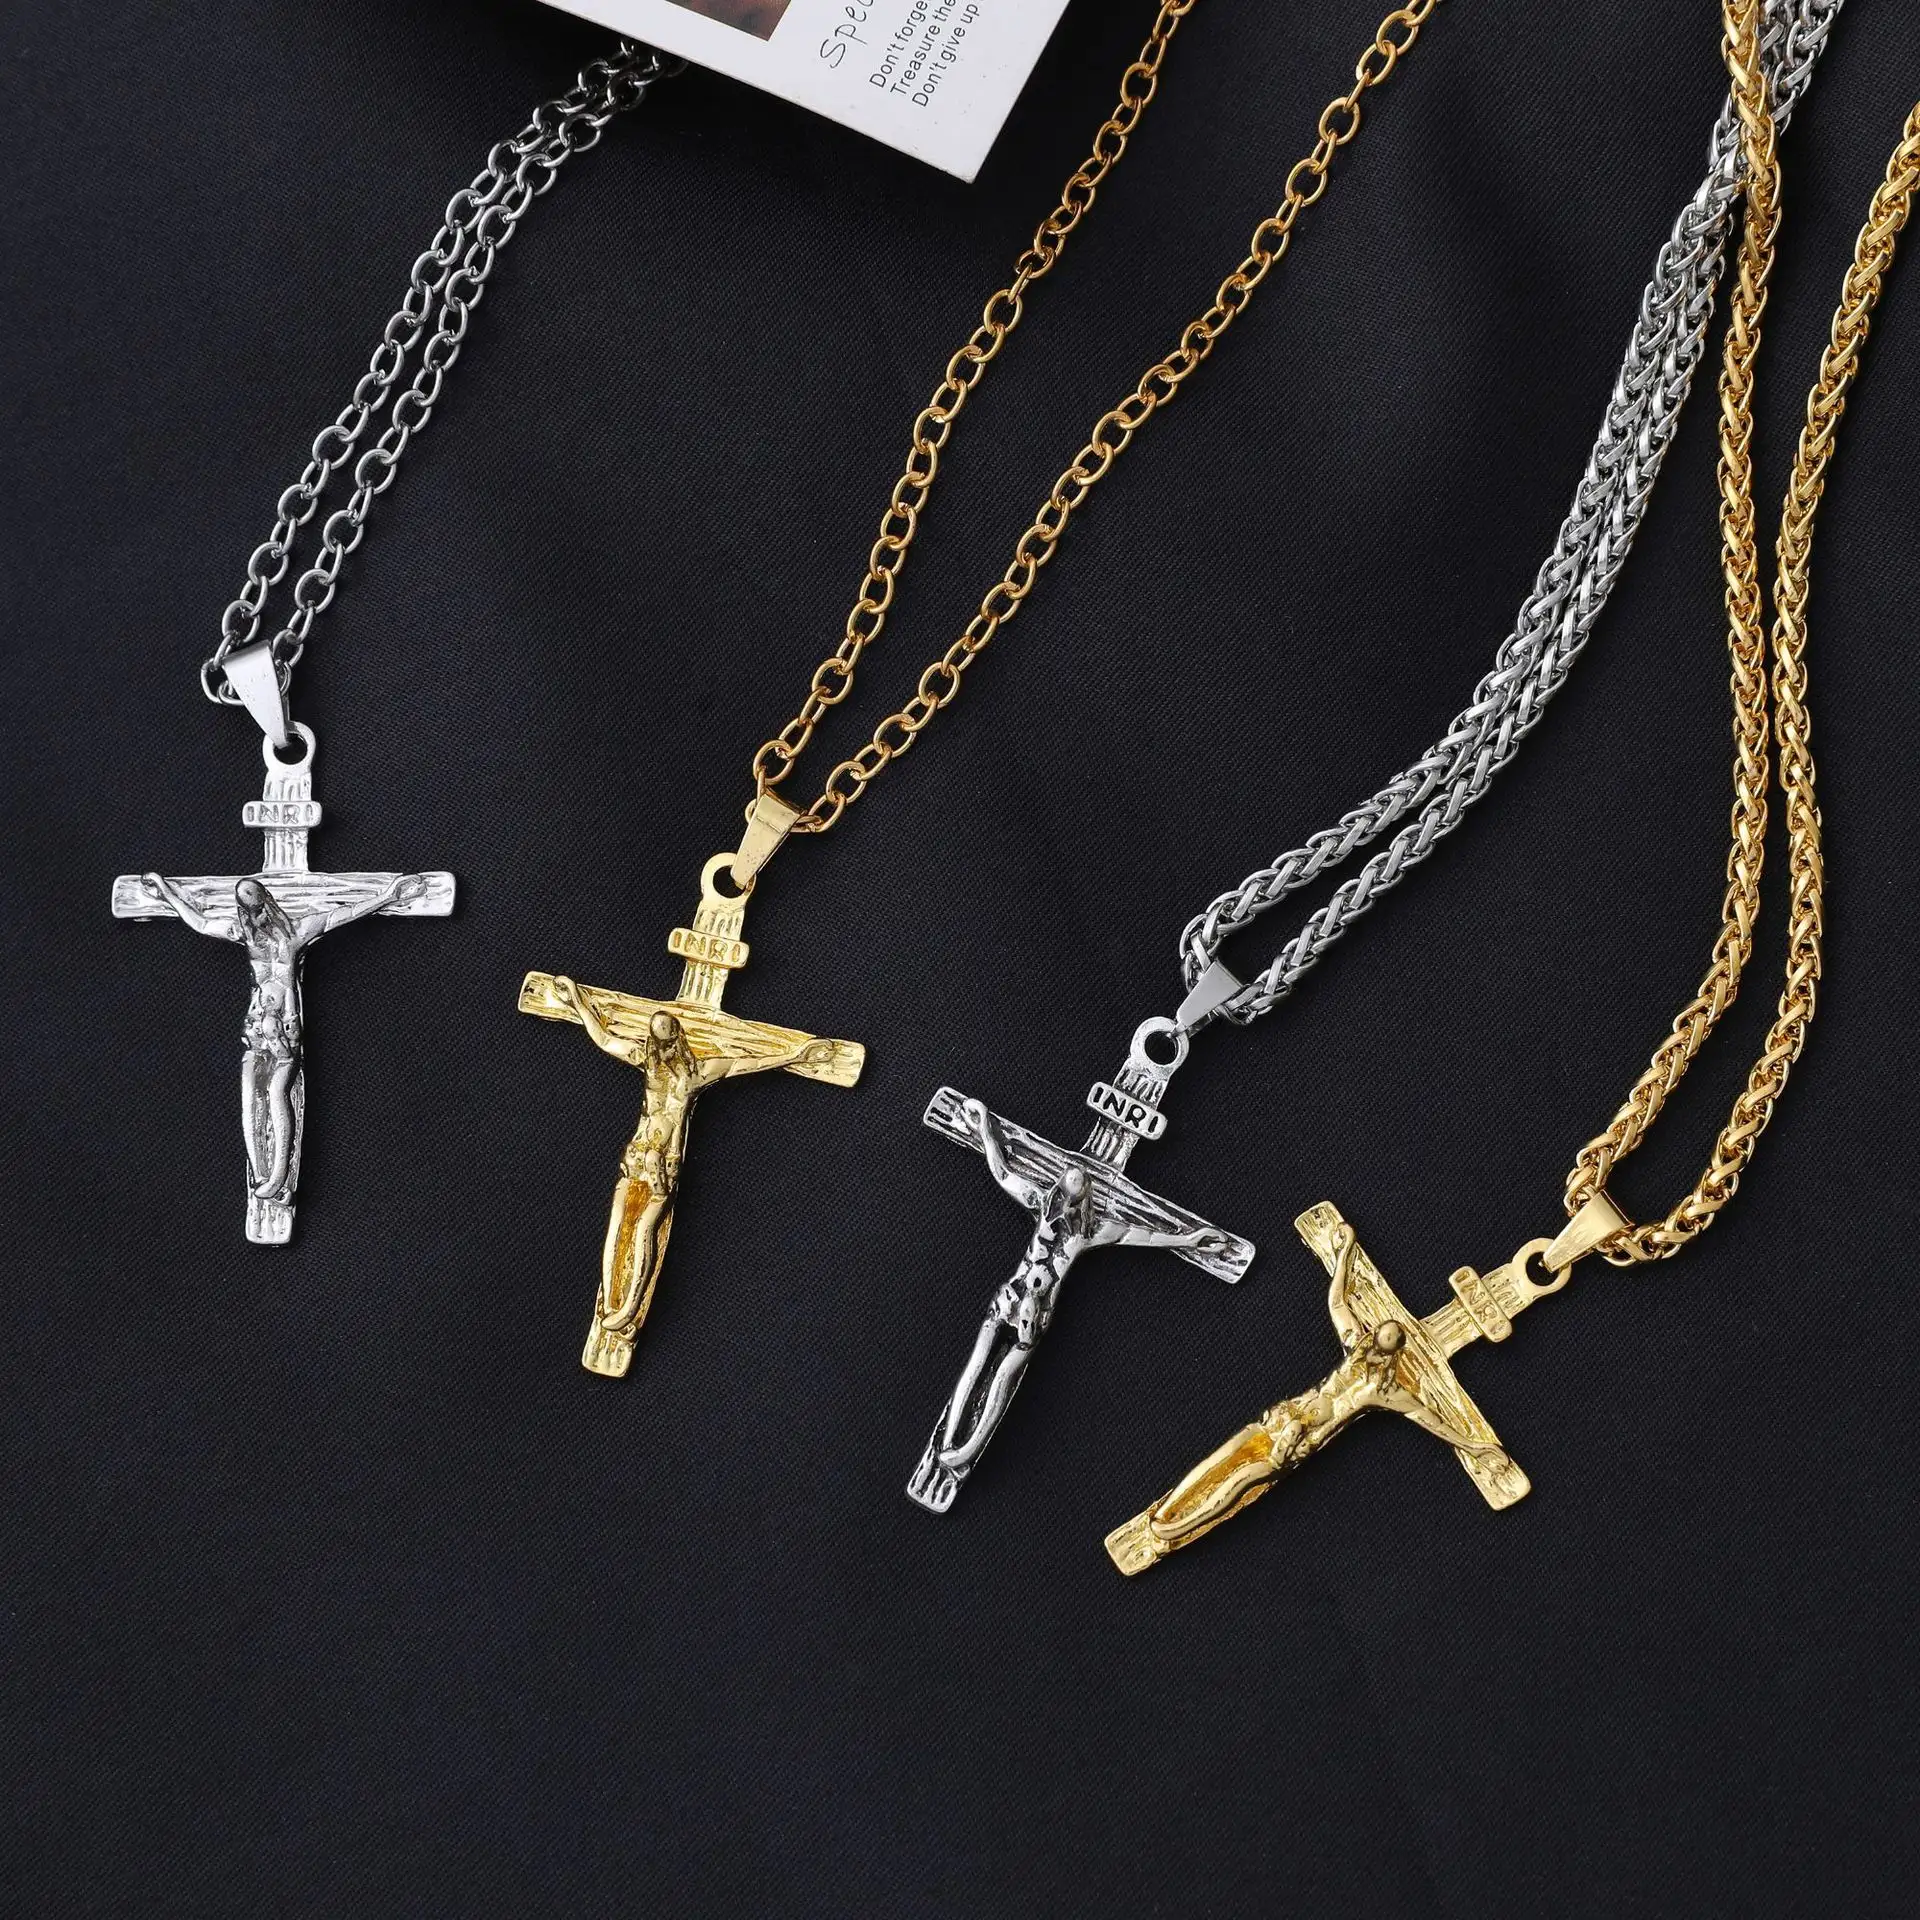 Hot Sale Religious Christian Jewelry Gold Color Crucifix Jesus Cross Pendant hip-hop keel chain necklace for men